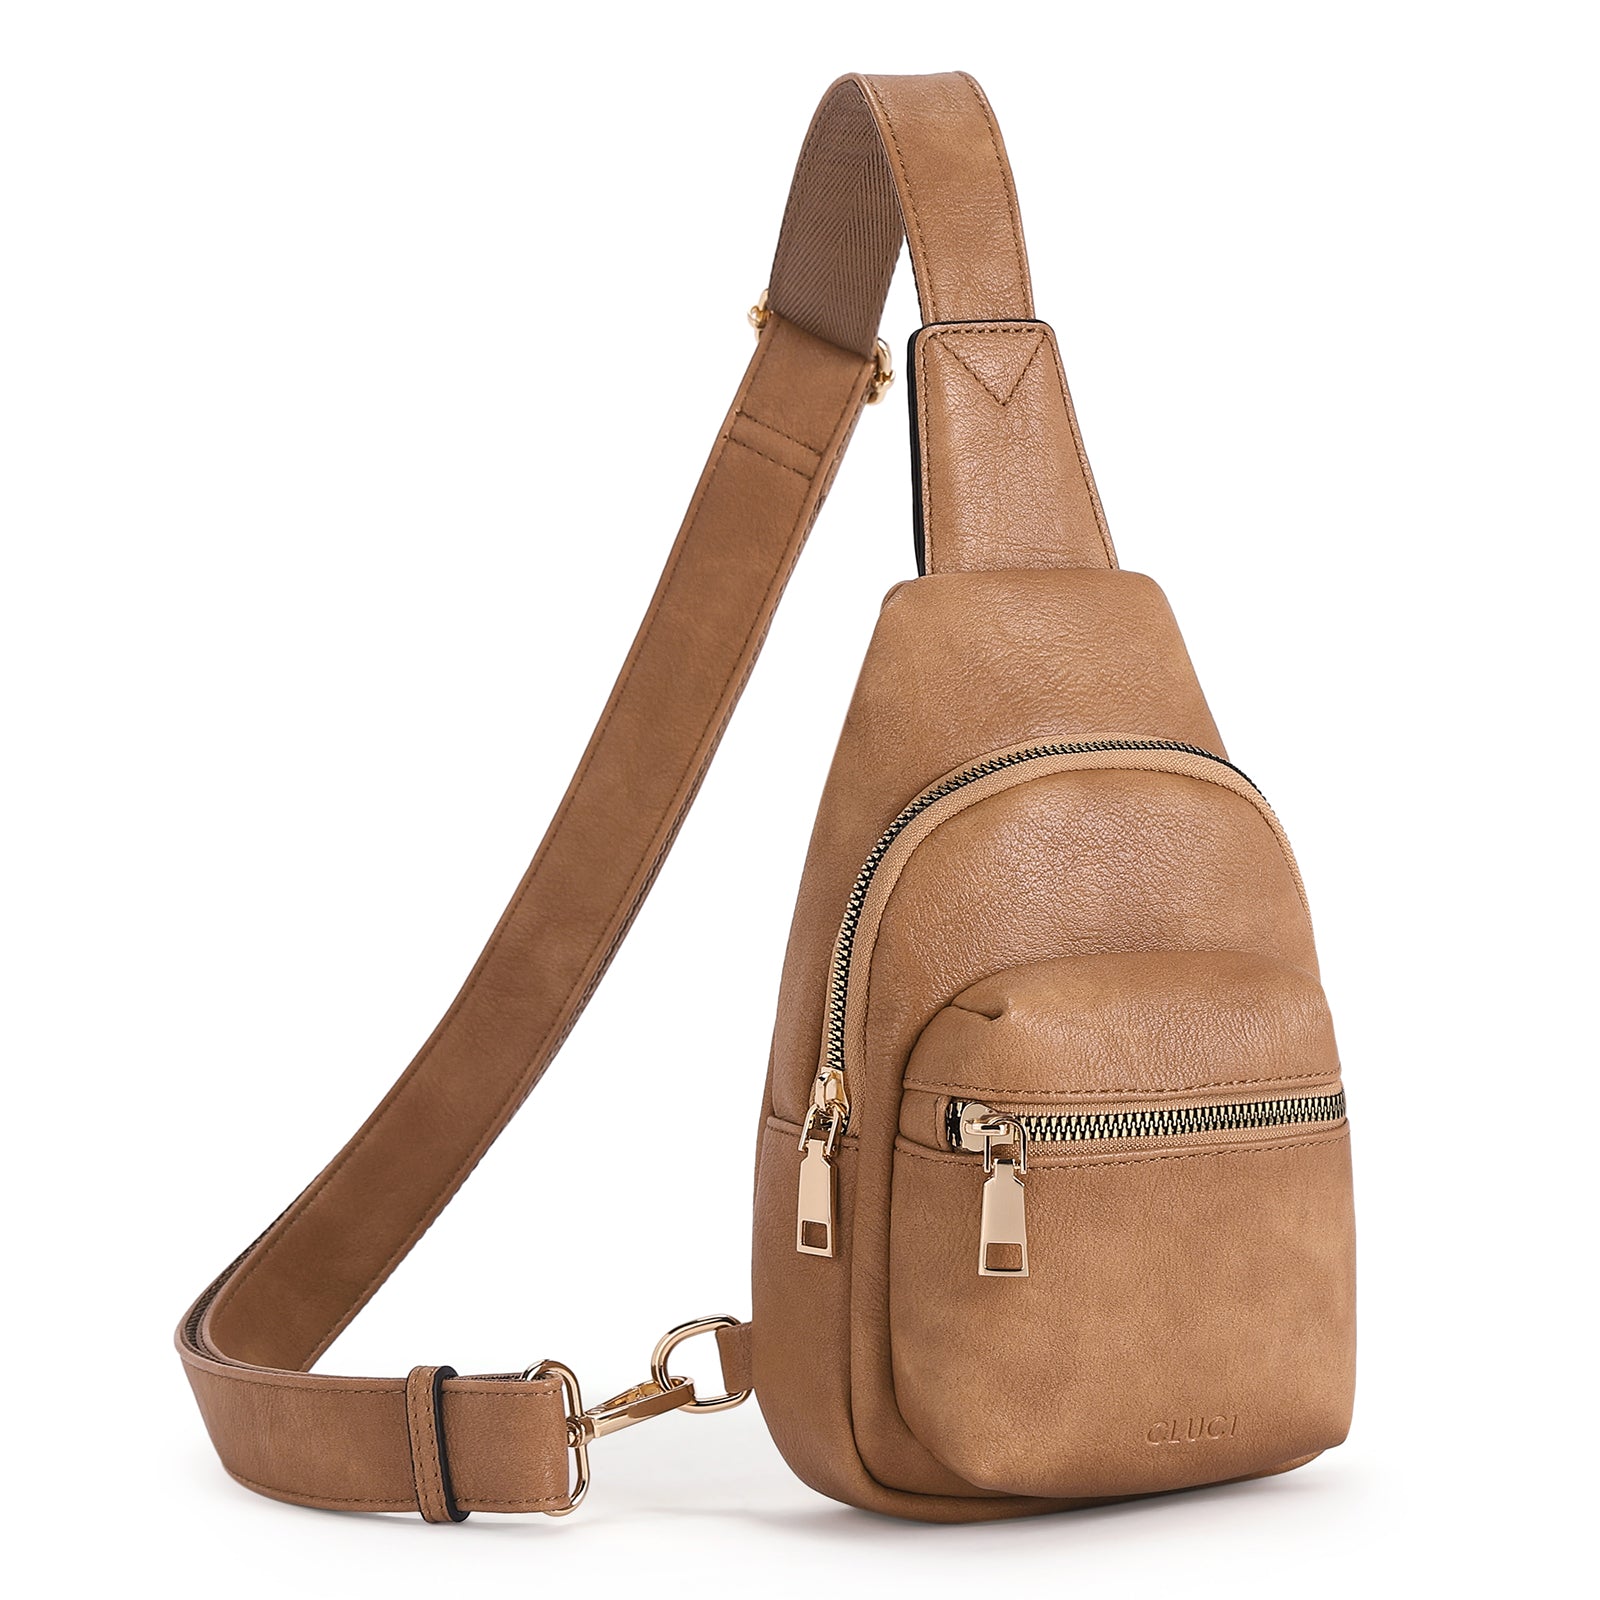 Jeep Purse | Bags, Leather handbags, Handbag